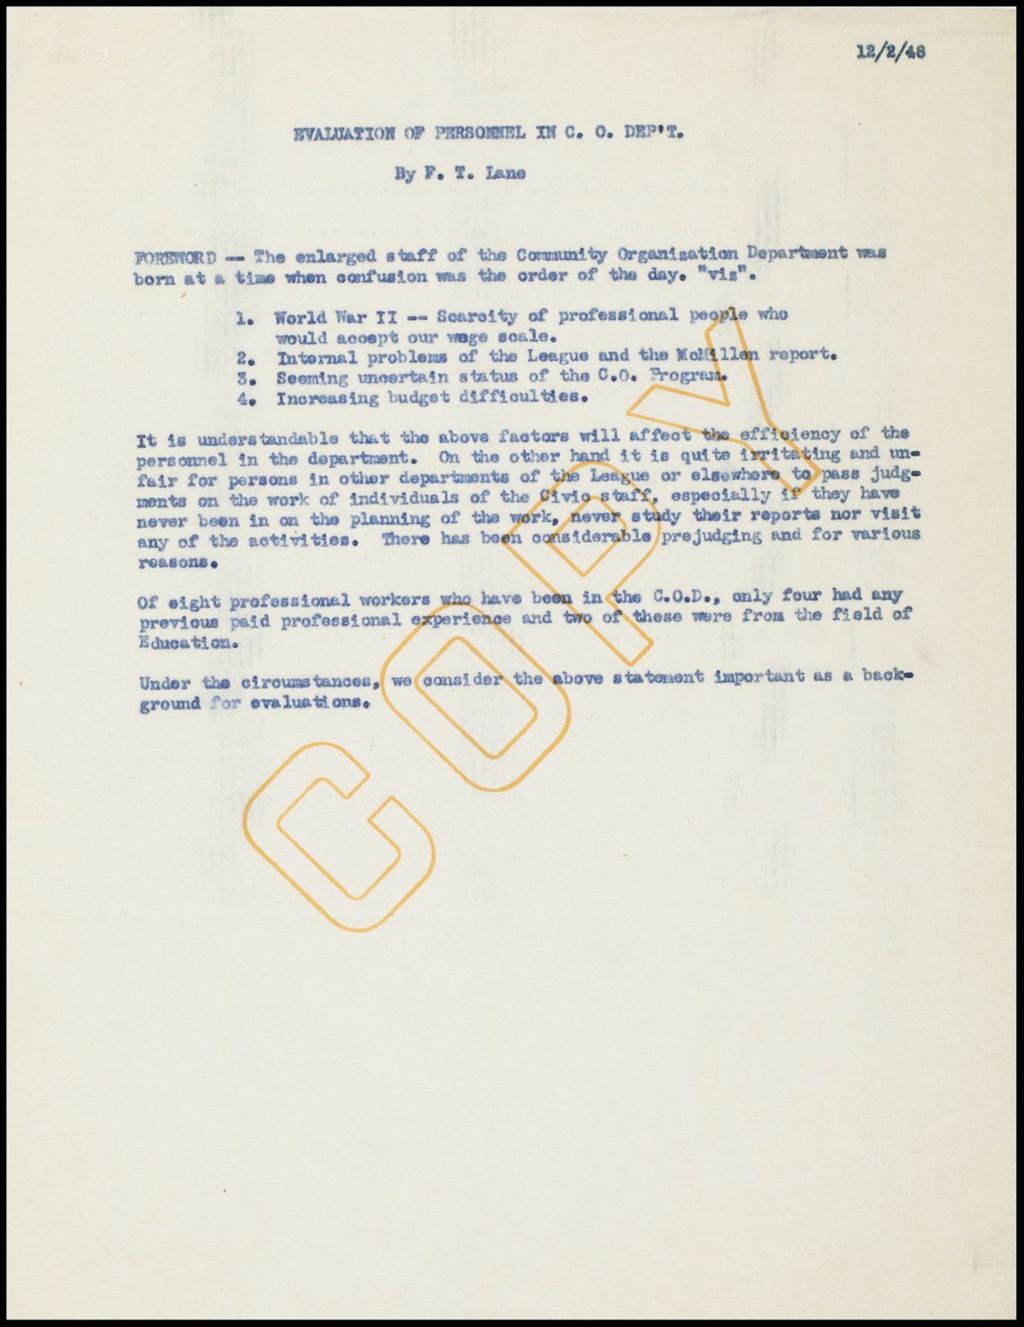 Evaluation of Personnel, 1948-1949 (Folder II-2281)